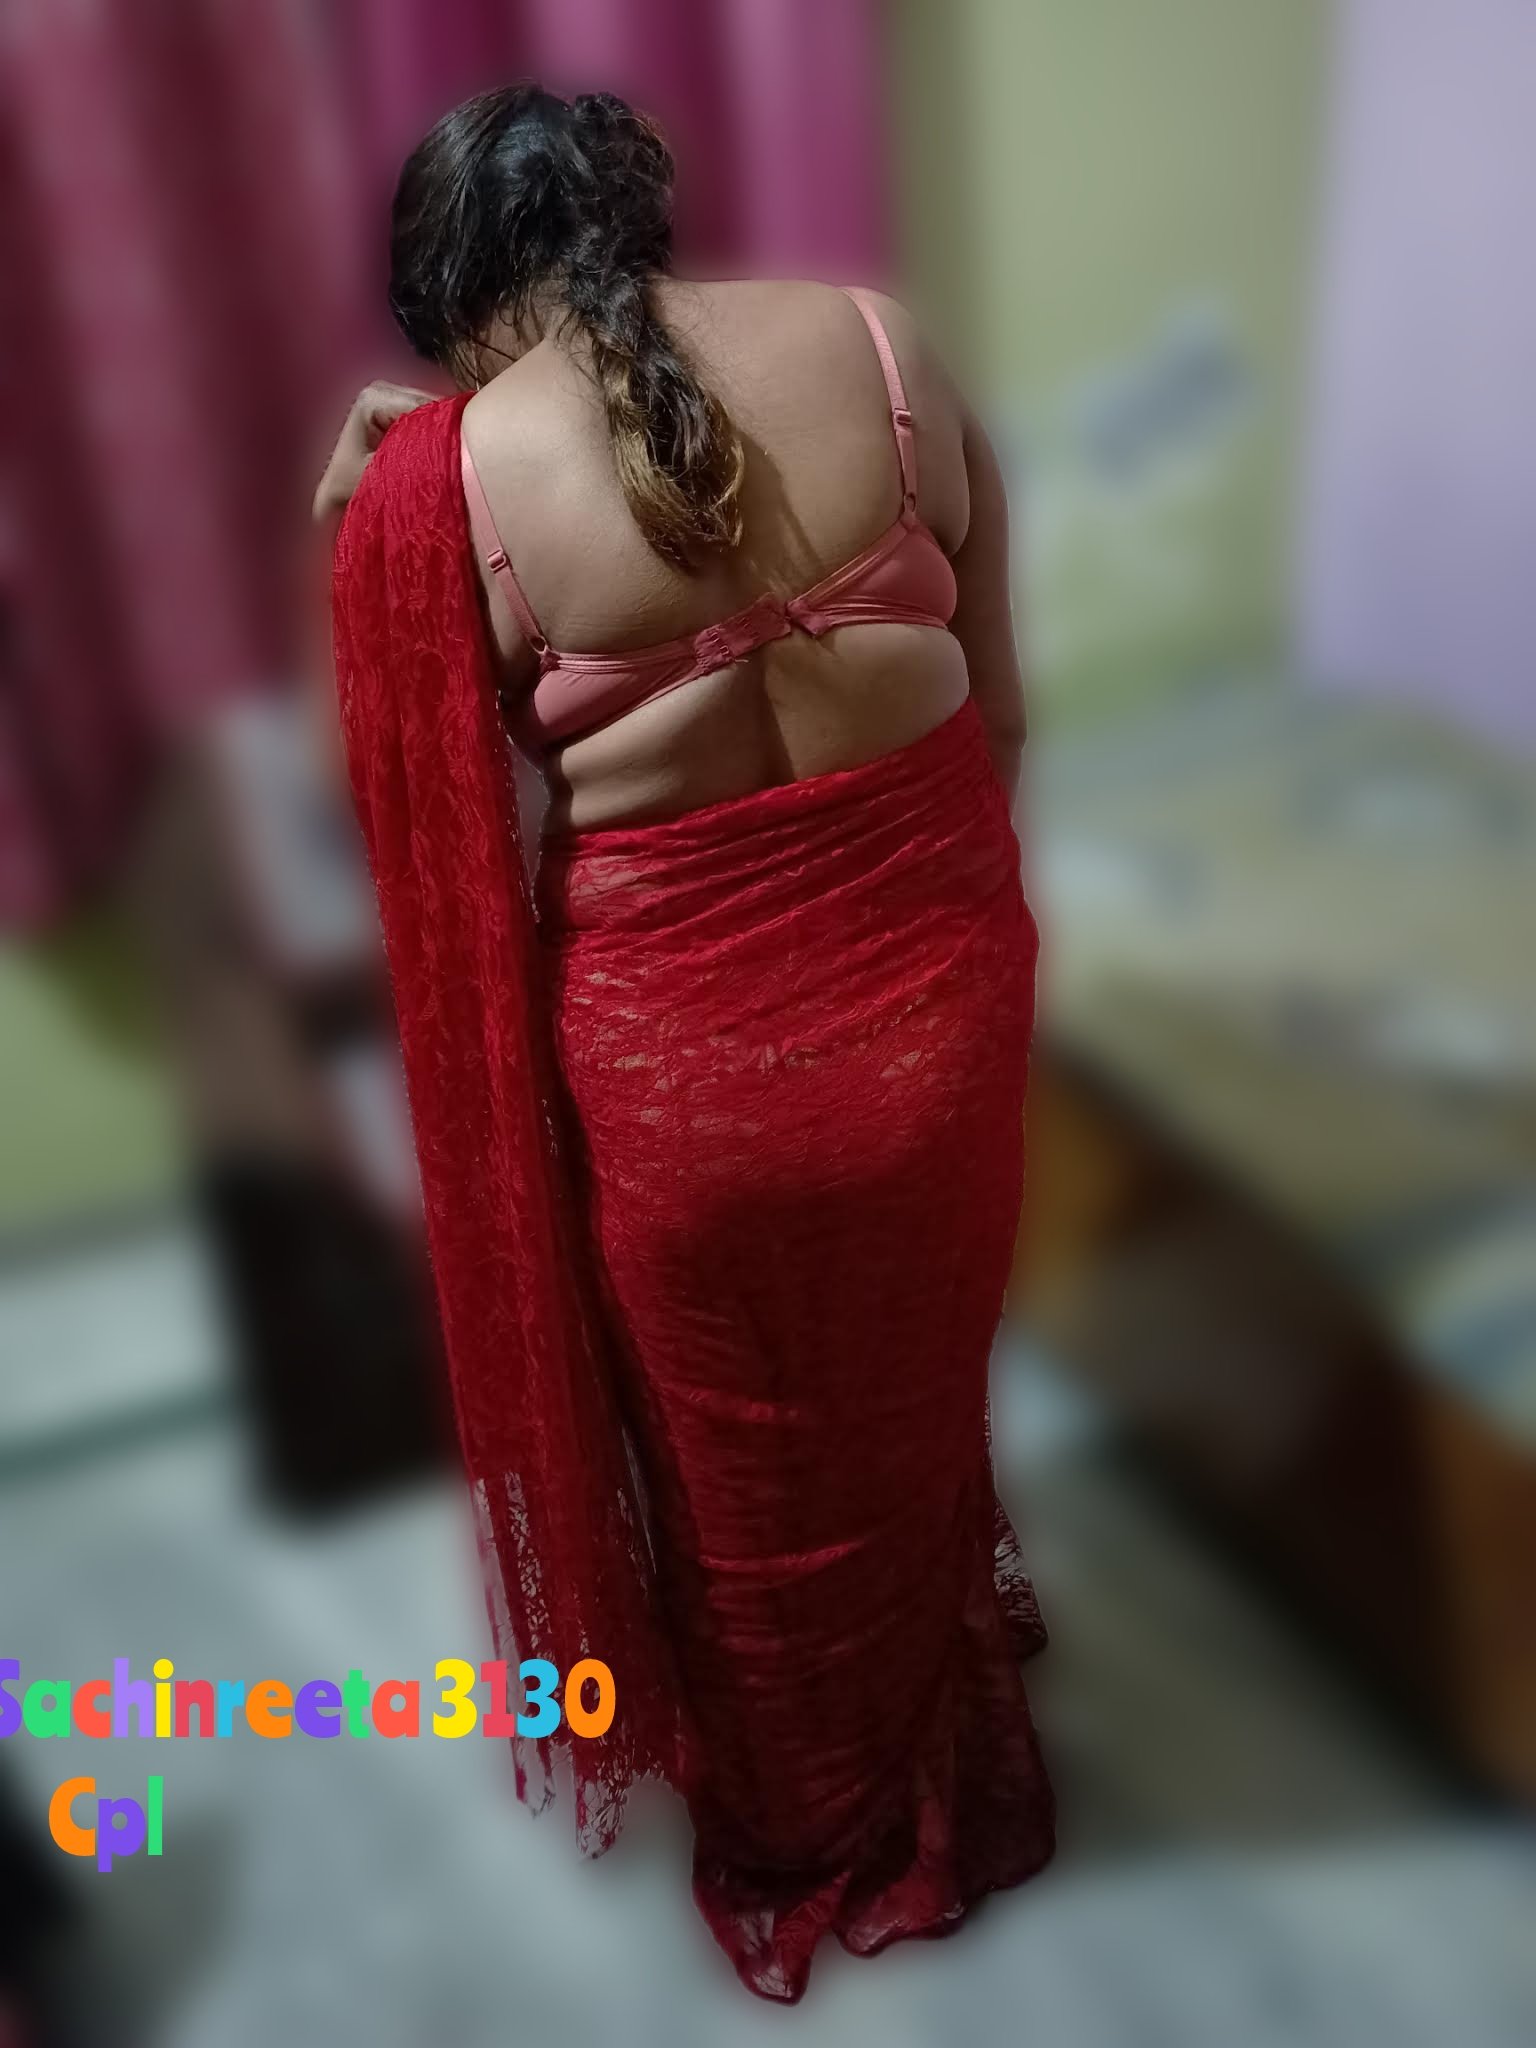 Sachinreeta3130 on Twitter "Sexy wife wa photo